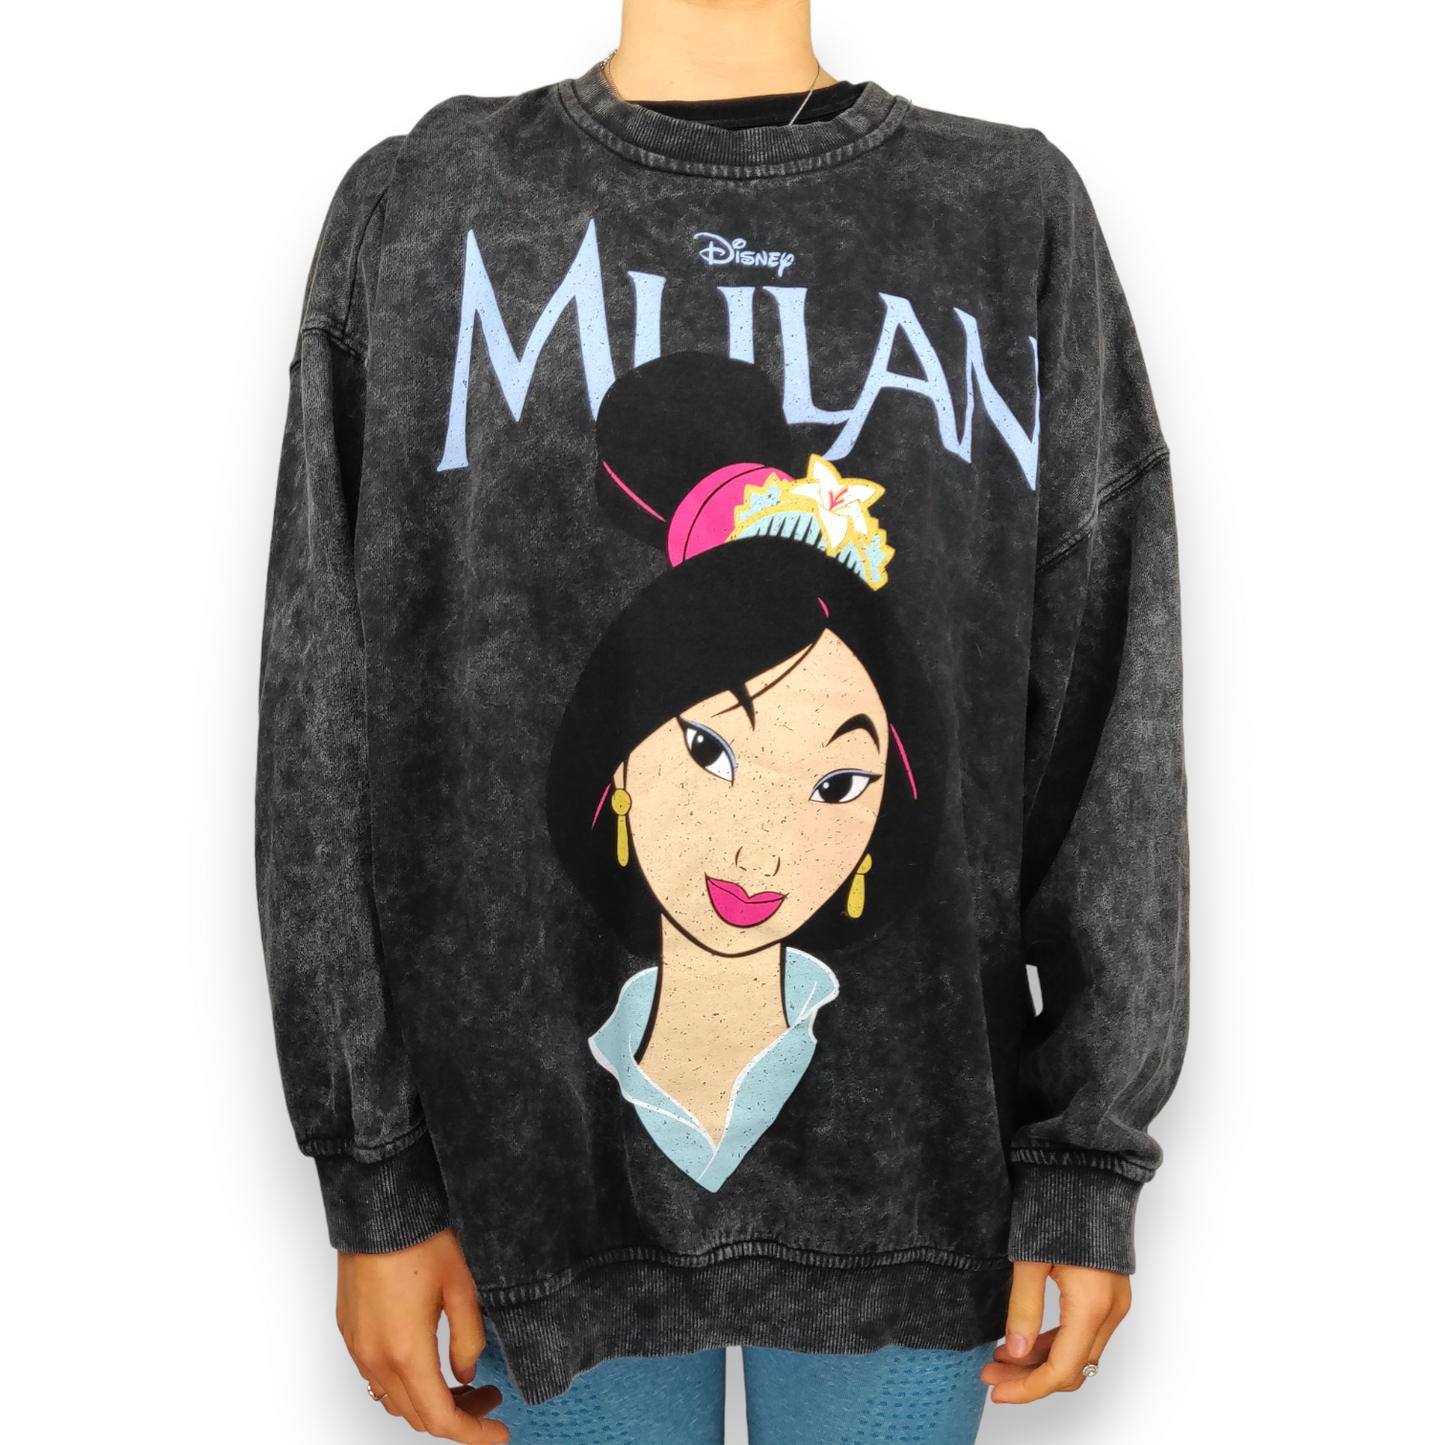 Bershka Disney Mulan Black Oversized Pullover Sweatshirt Women Size XS